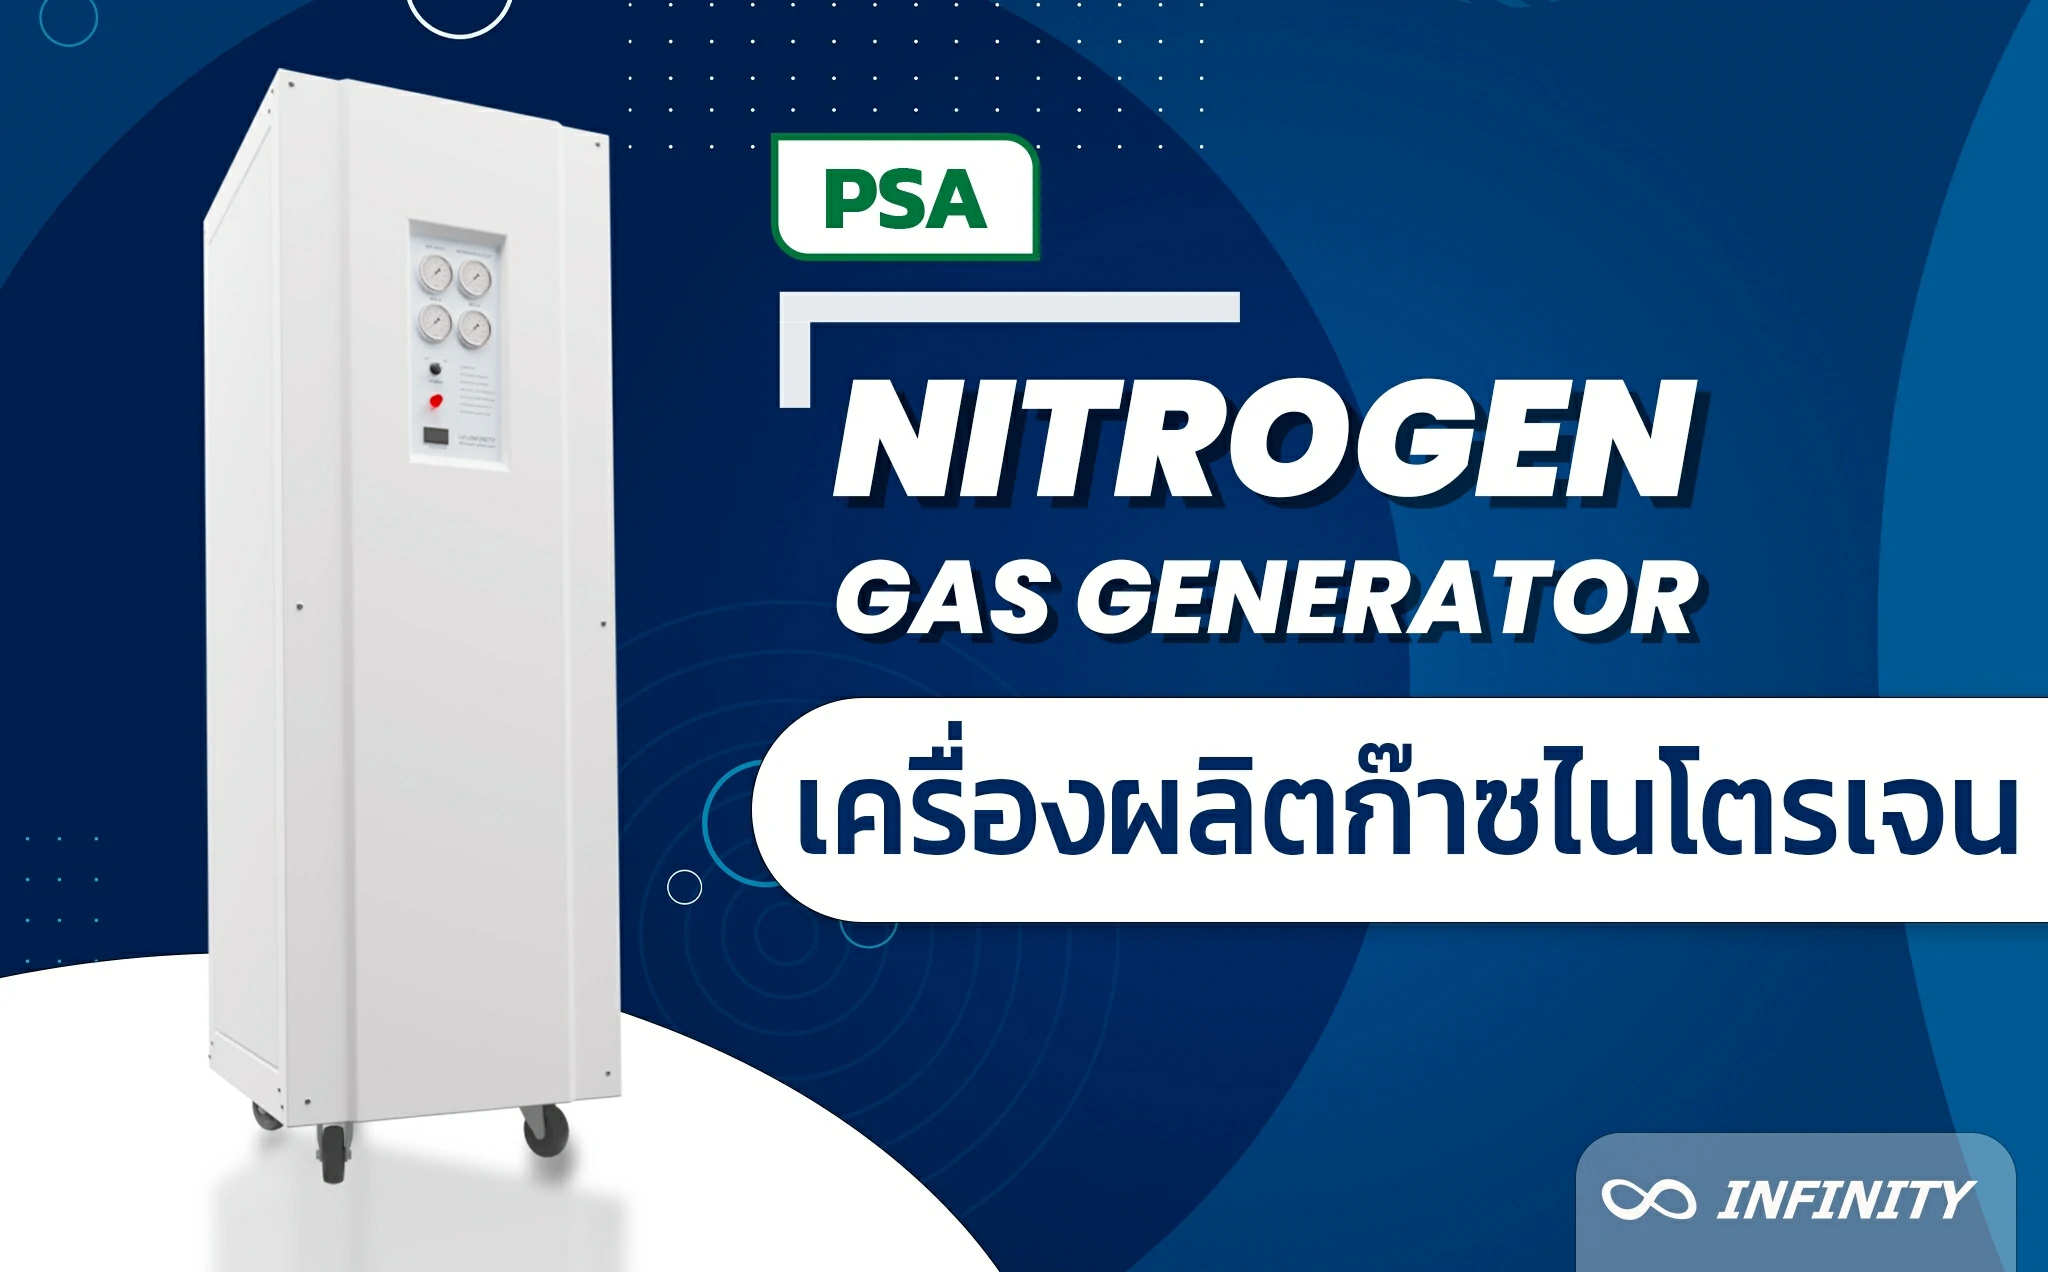 Nitrogen Gas Generator PSA